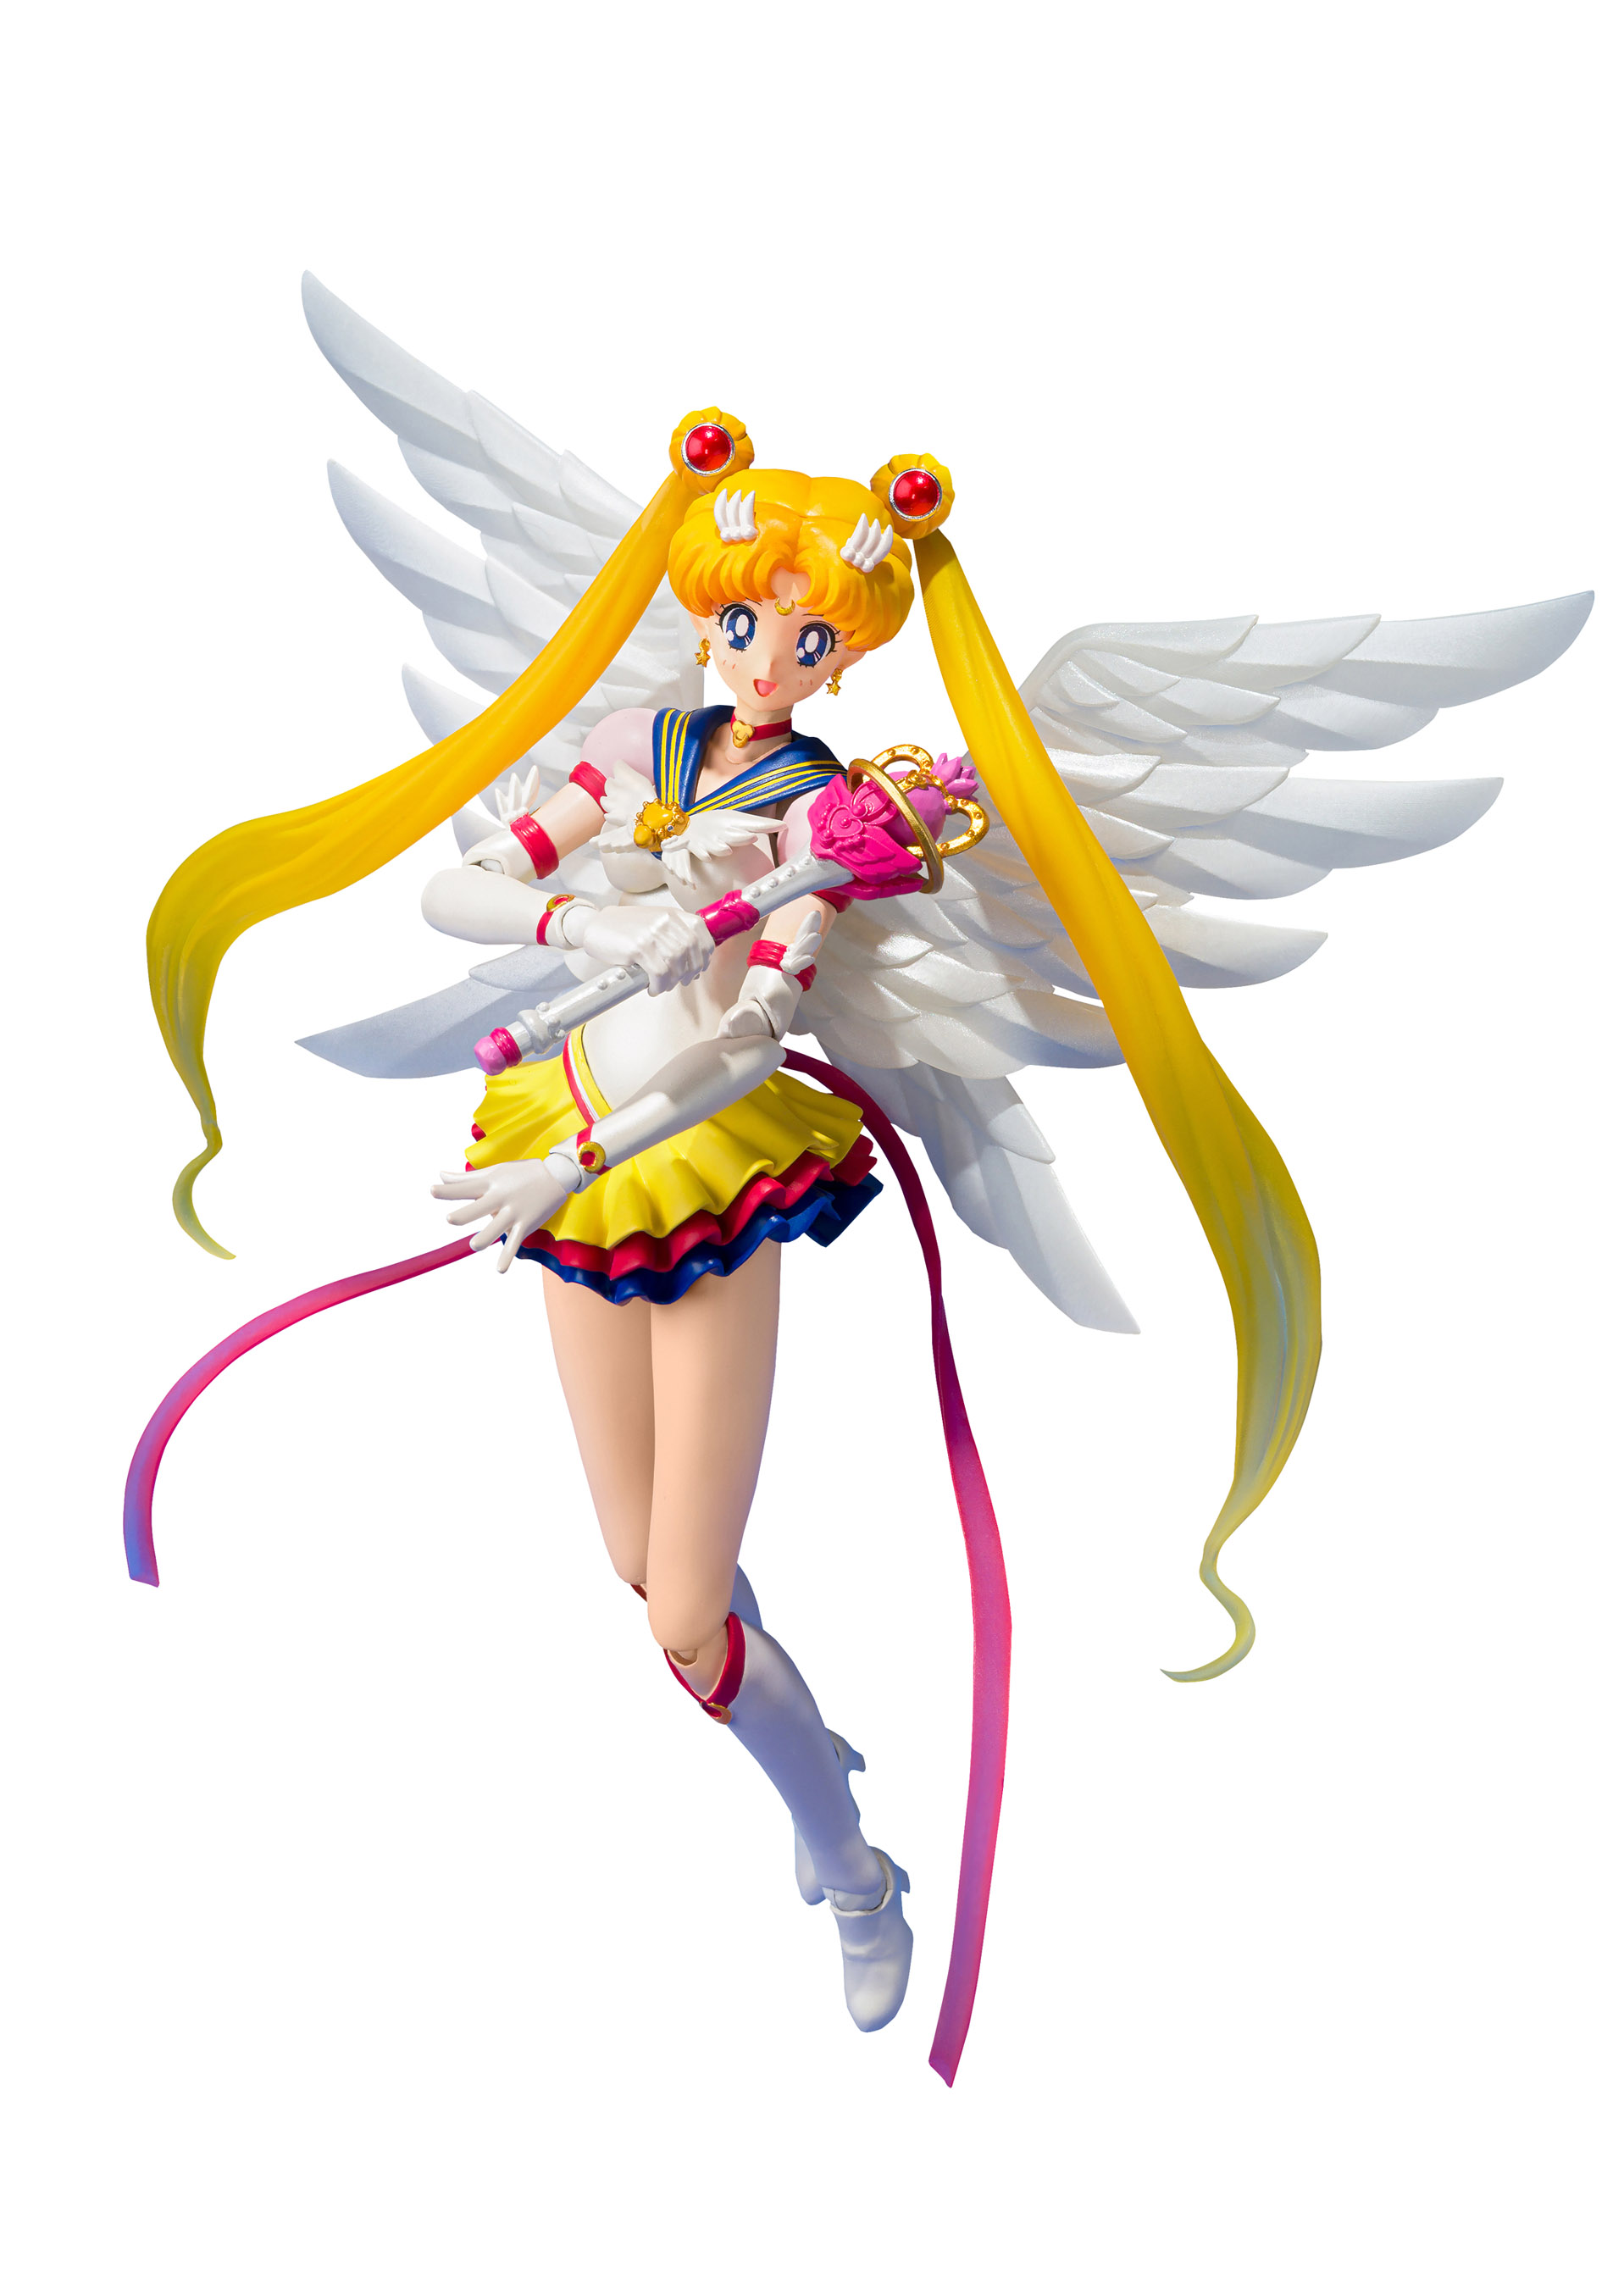 Bandai: S.H. Figuarts: Eternal Sailor Moon "Pretty Guardian Sailor Moon Sailor Stars" 